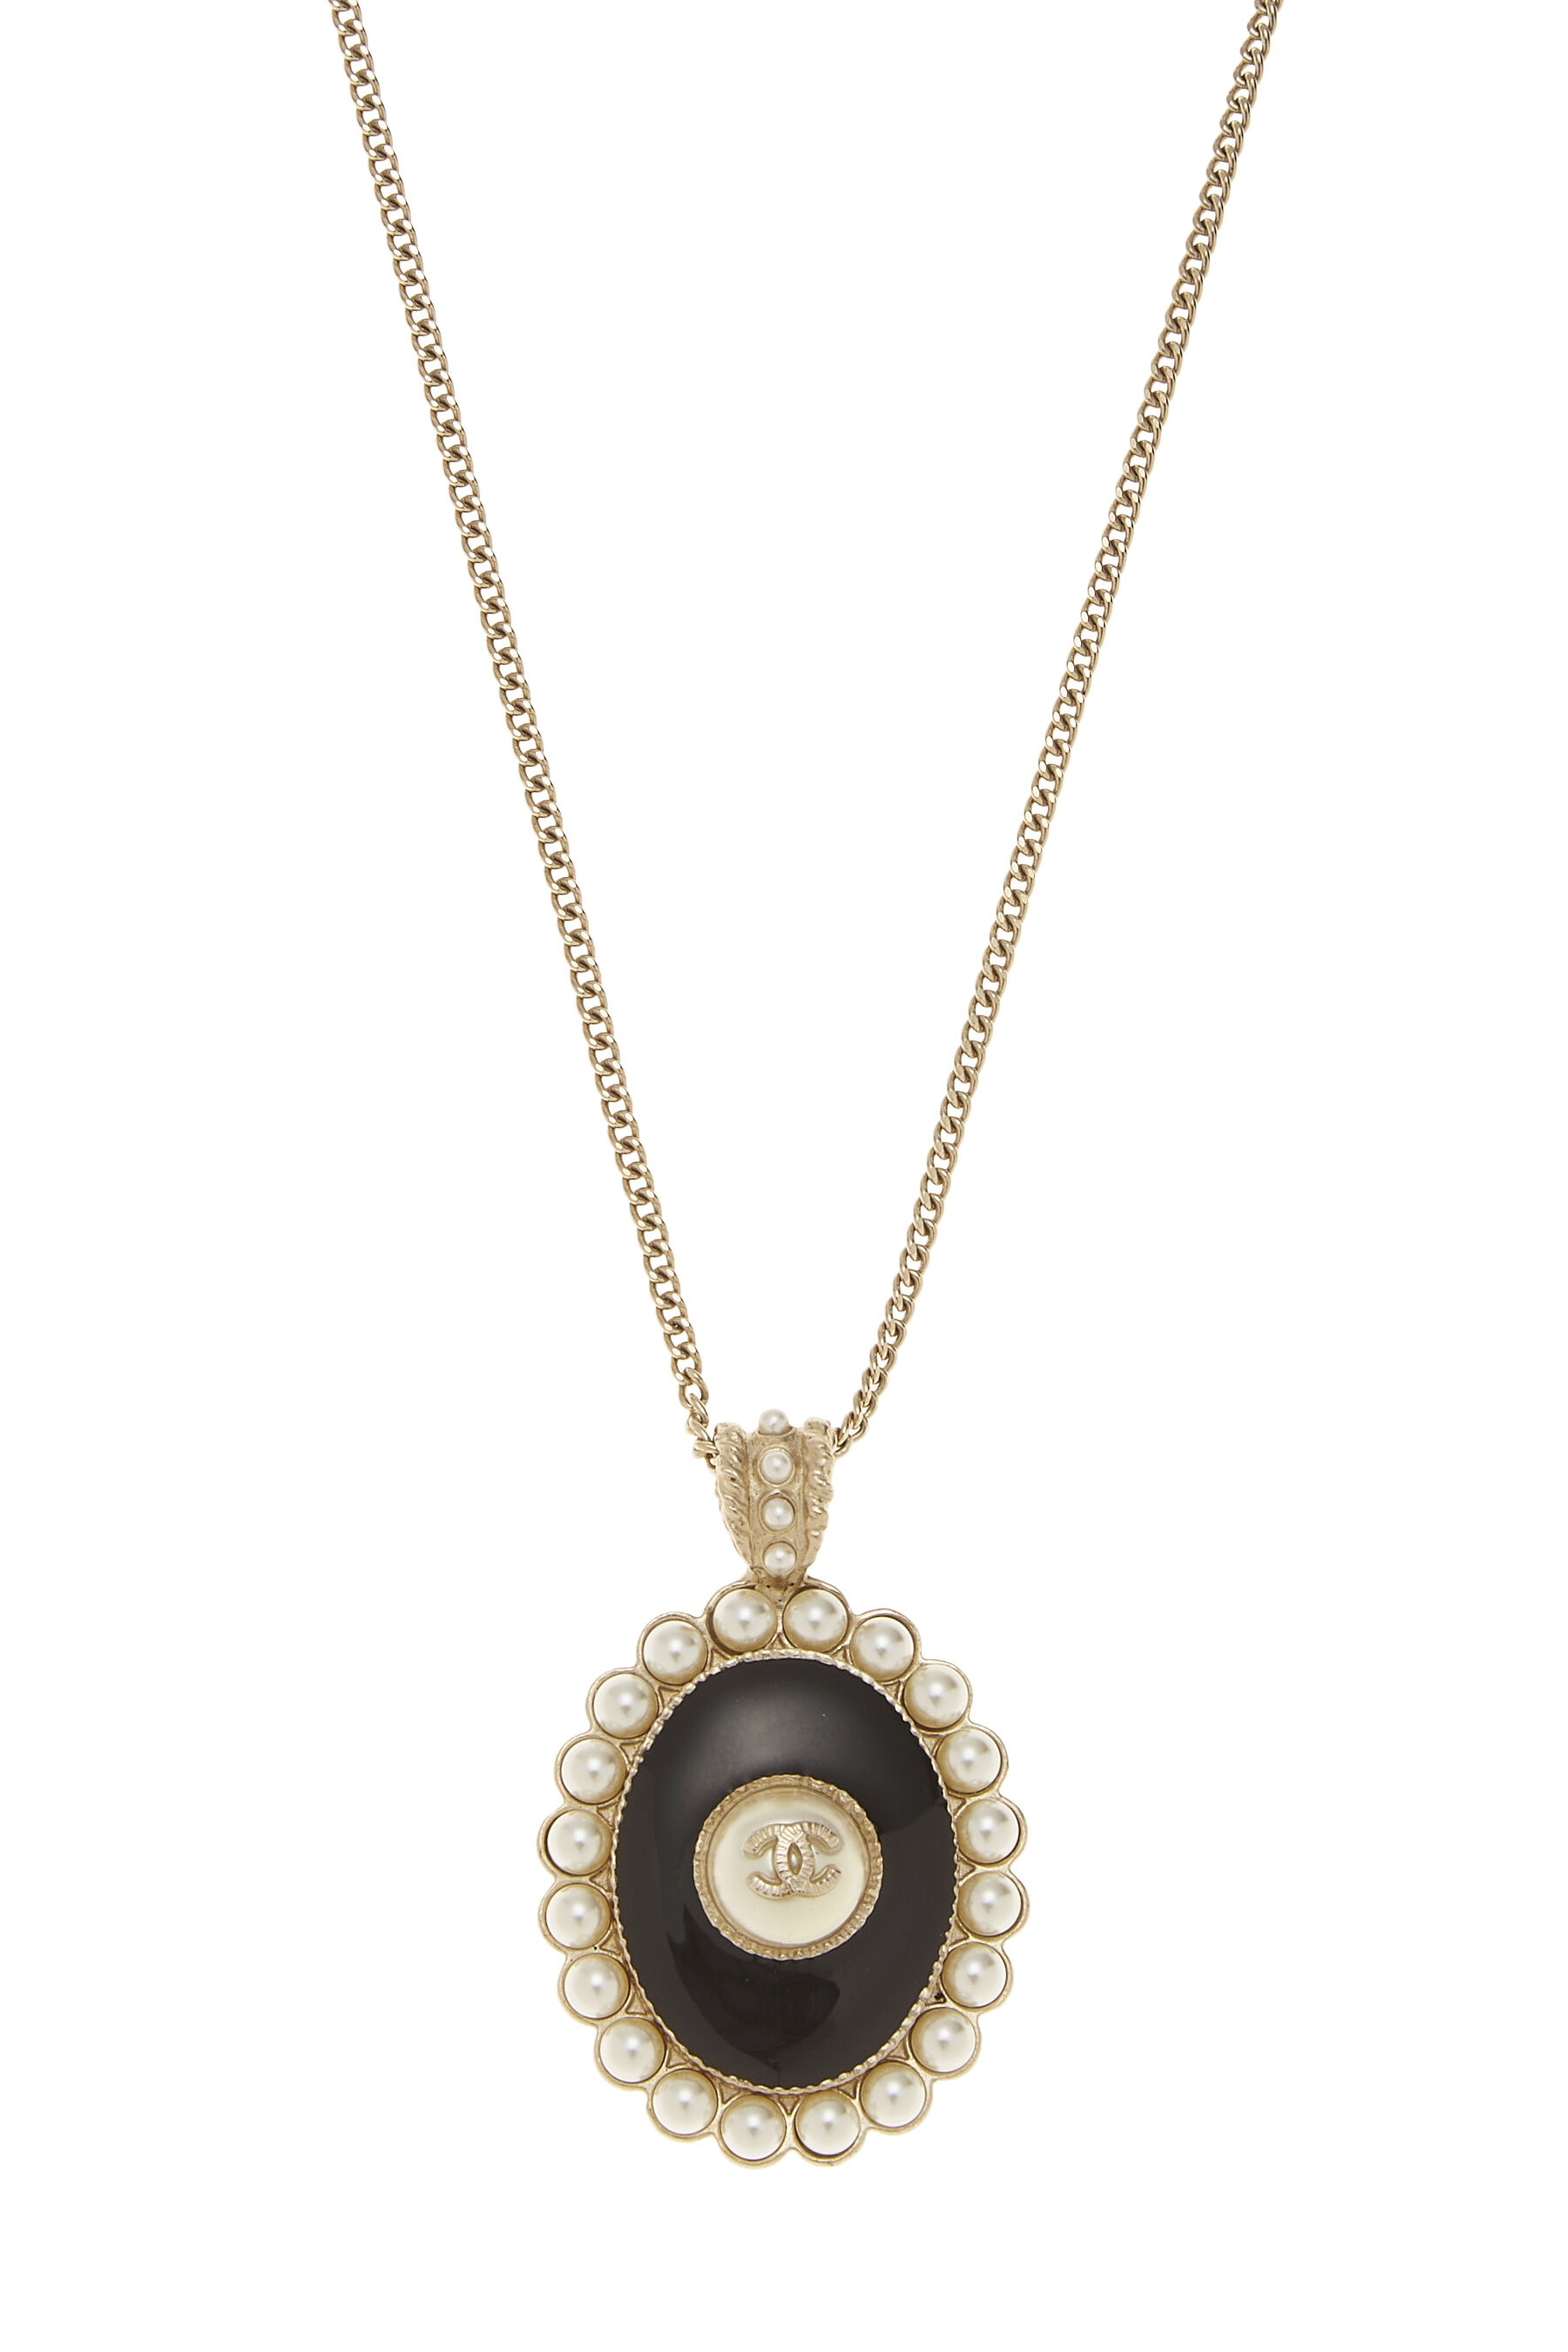 Chanel Black Enamel & Faux Pearl Oval Pendant Necklace Q6J4SV17DB000